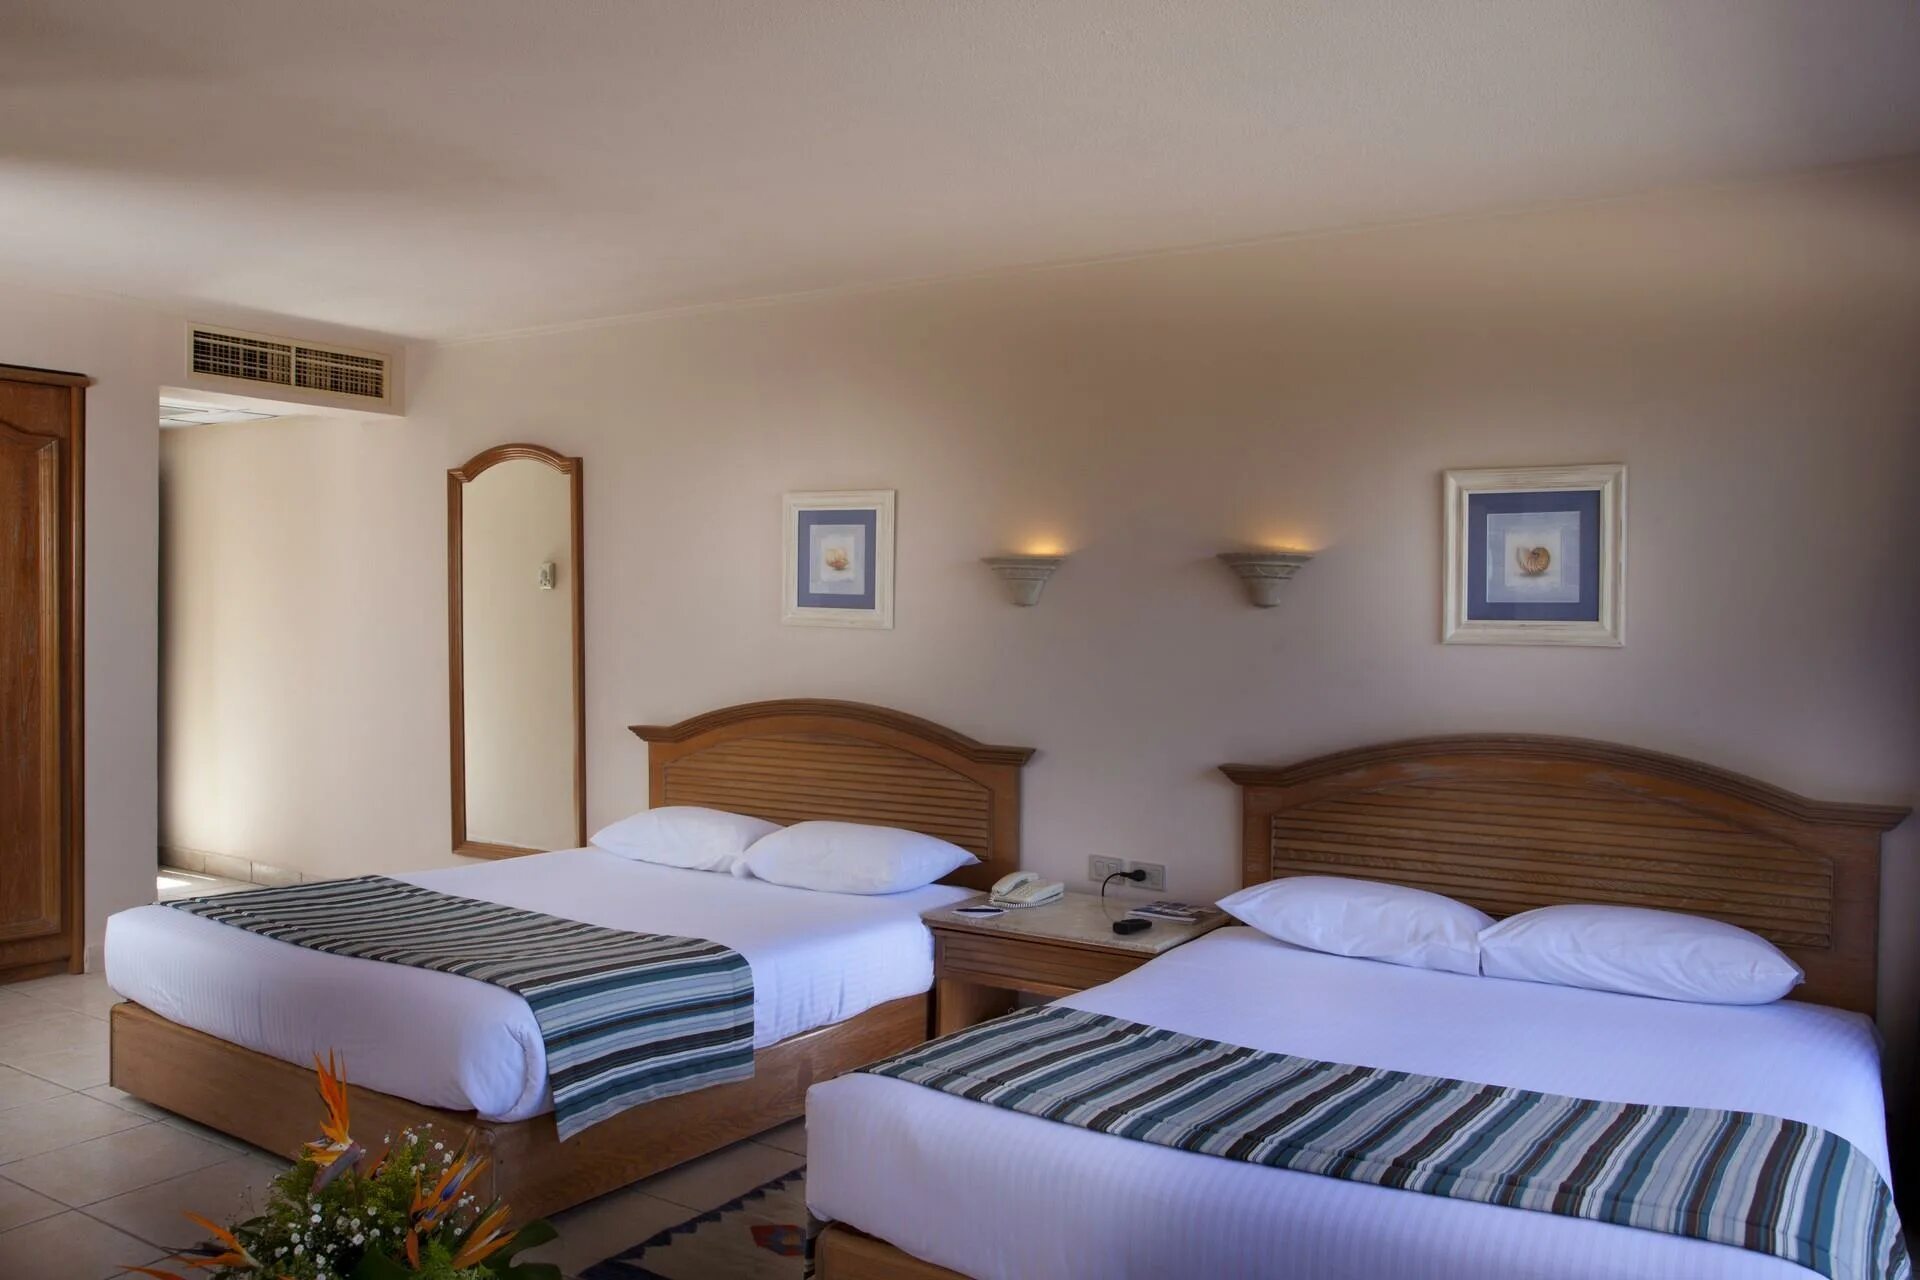 Coral beach rotana 4. Отель Coral Beach Hotel Hurghada. Корал Бич Хургада. Coral Beach Hotel Hurghada 4. Египет Хургада отель Корал Бич Резорт 4 звезды.